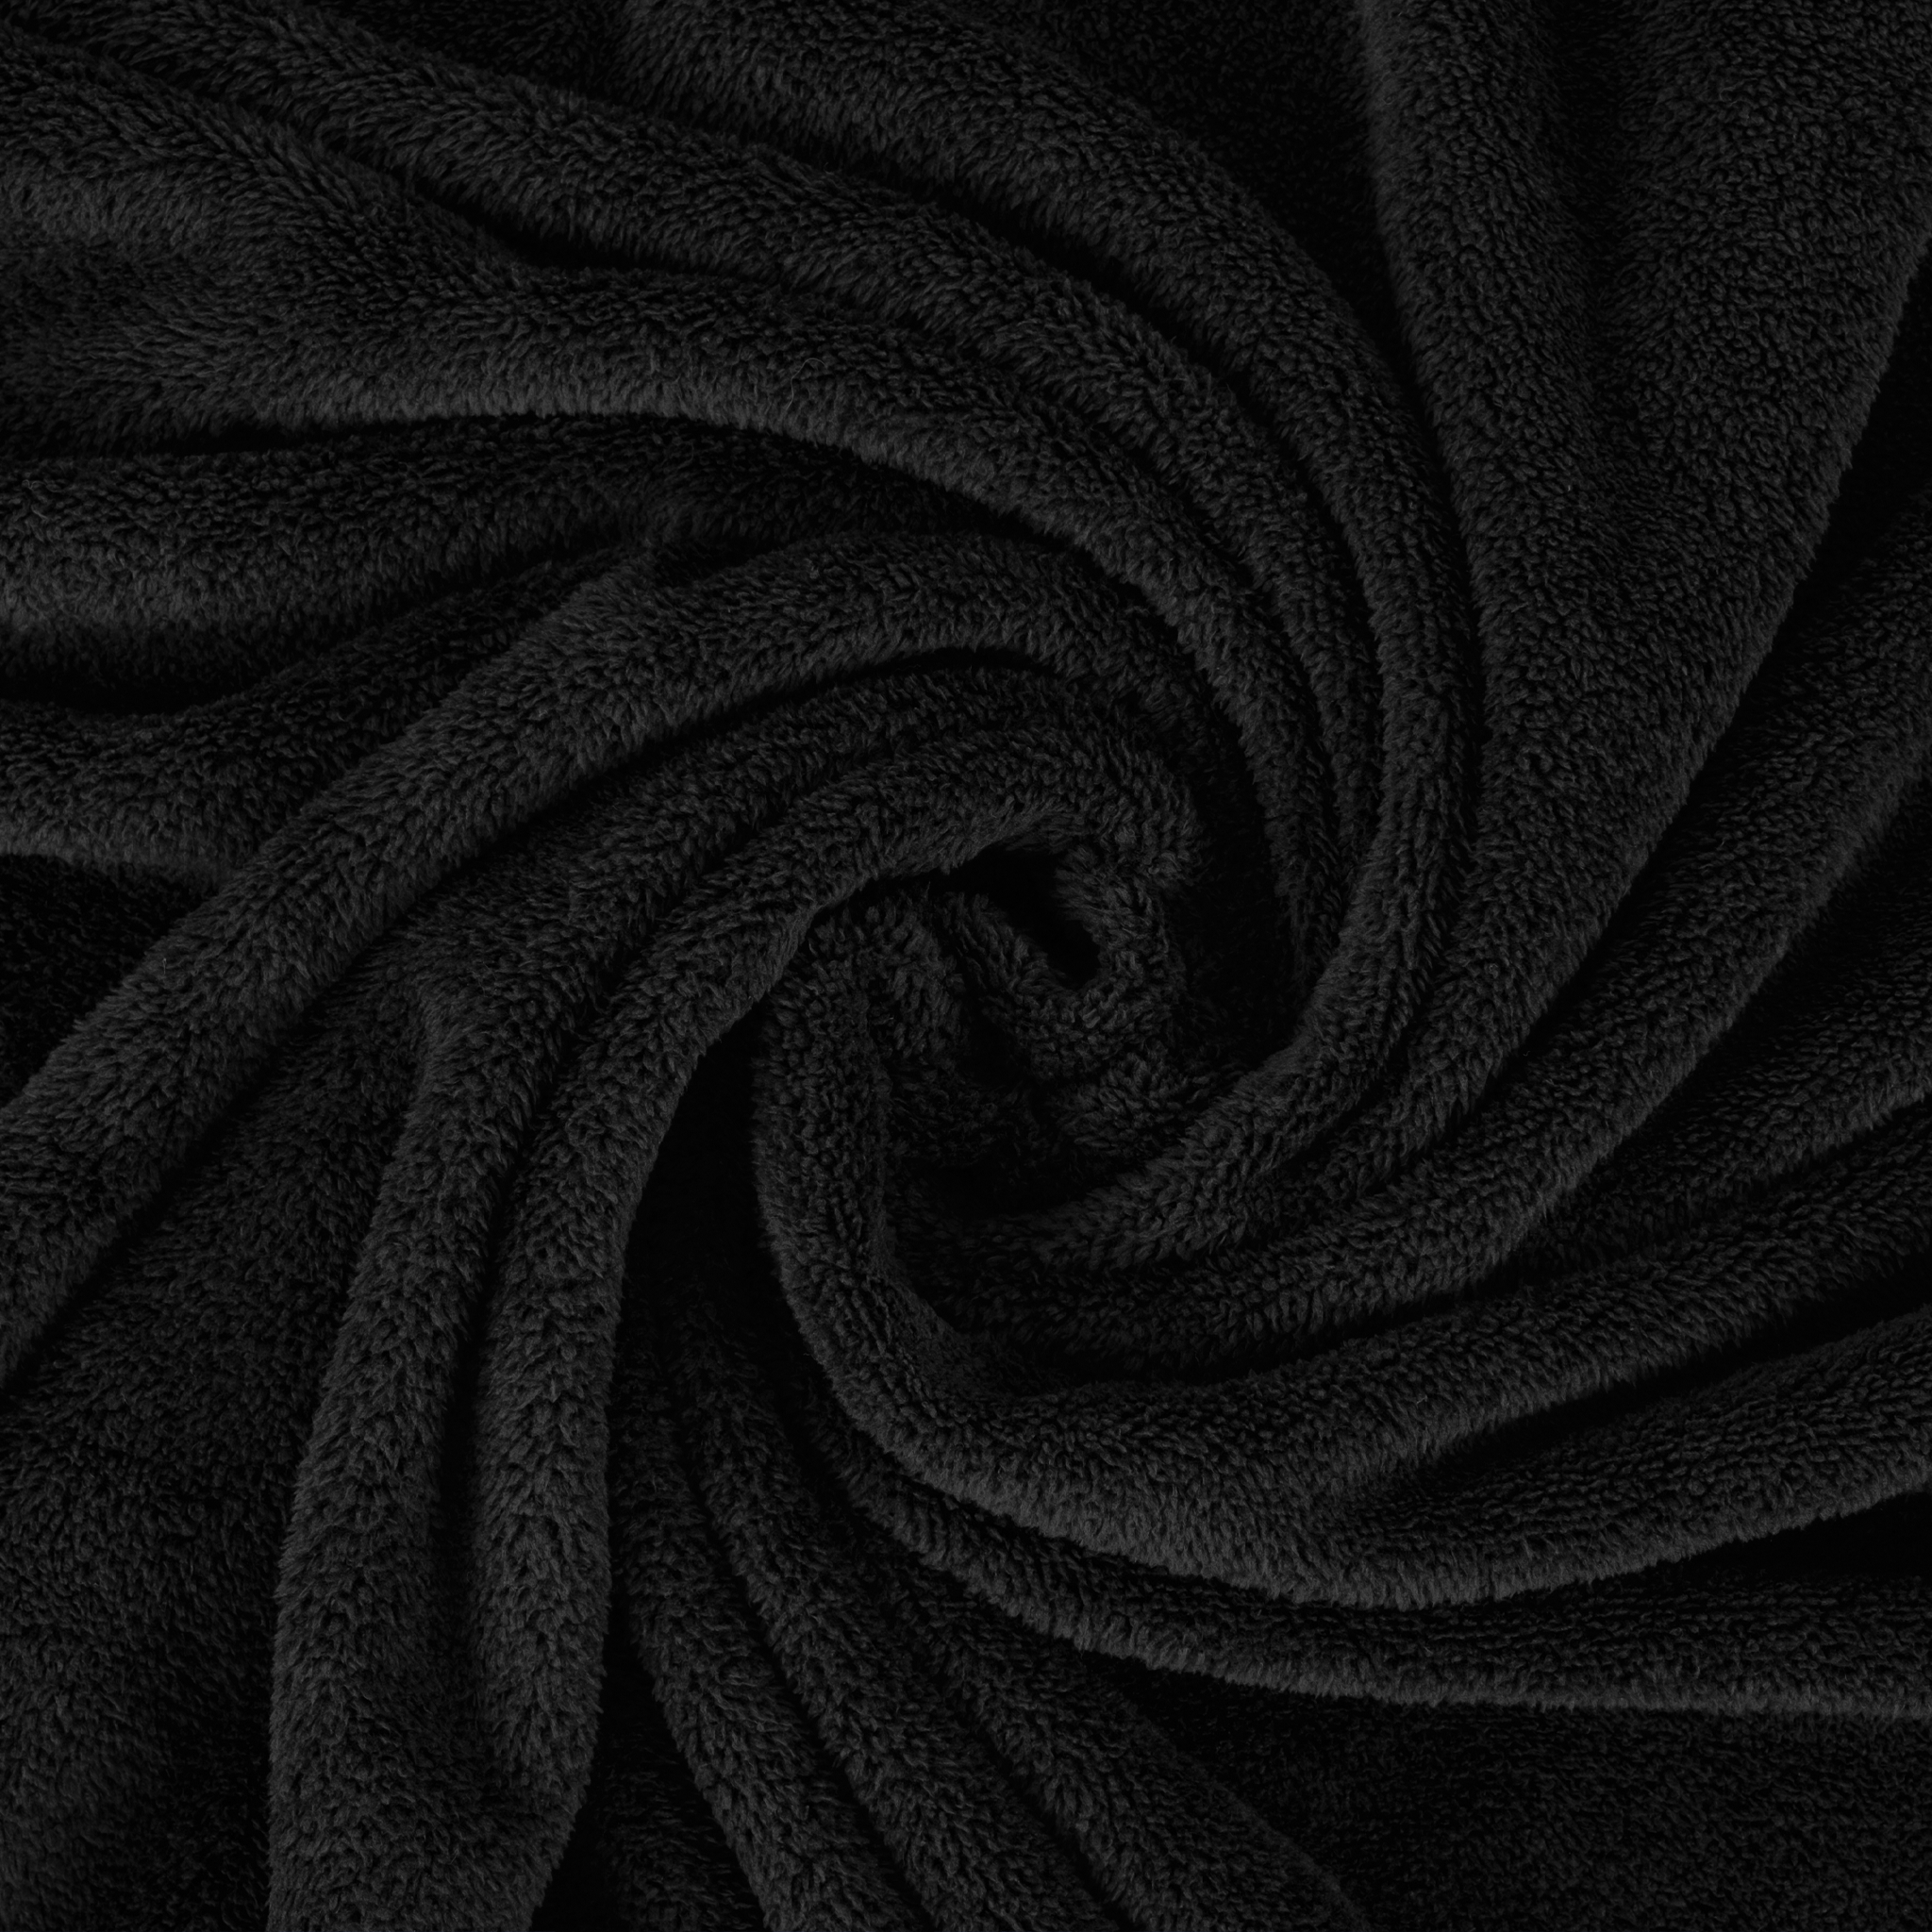 American Soft Linen - Bedding Fleece Blanket - Wholesale - 9 Set Case Pack - Queen Size 85x90 inches - Black - 5